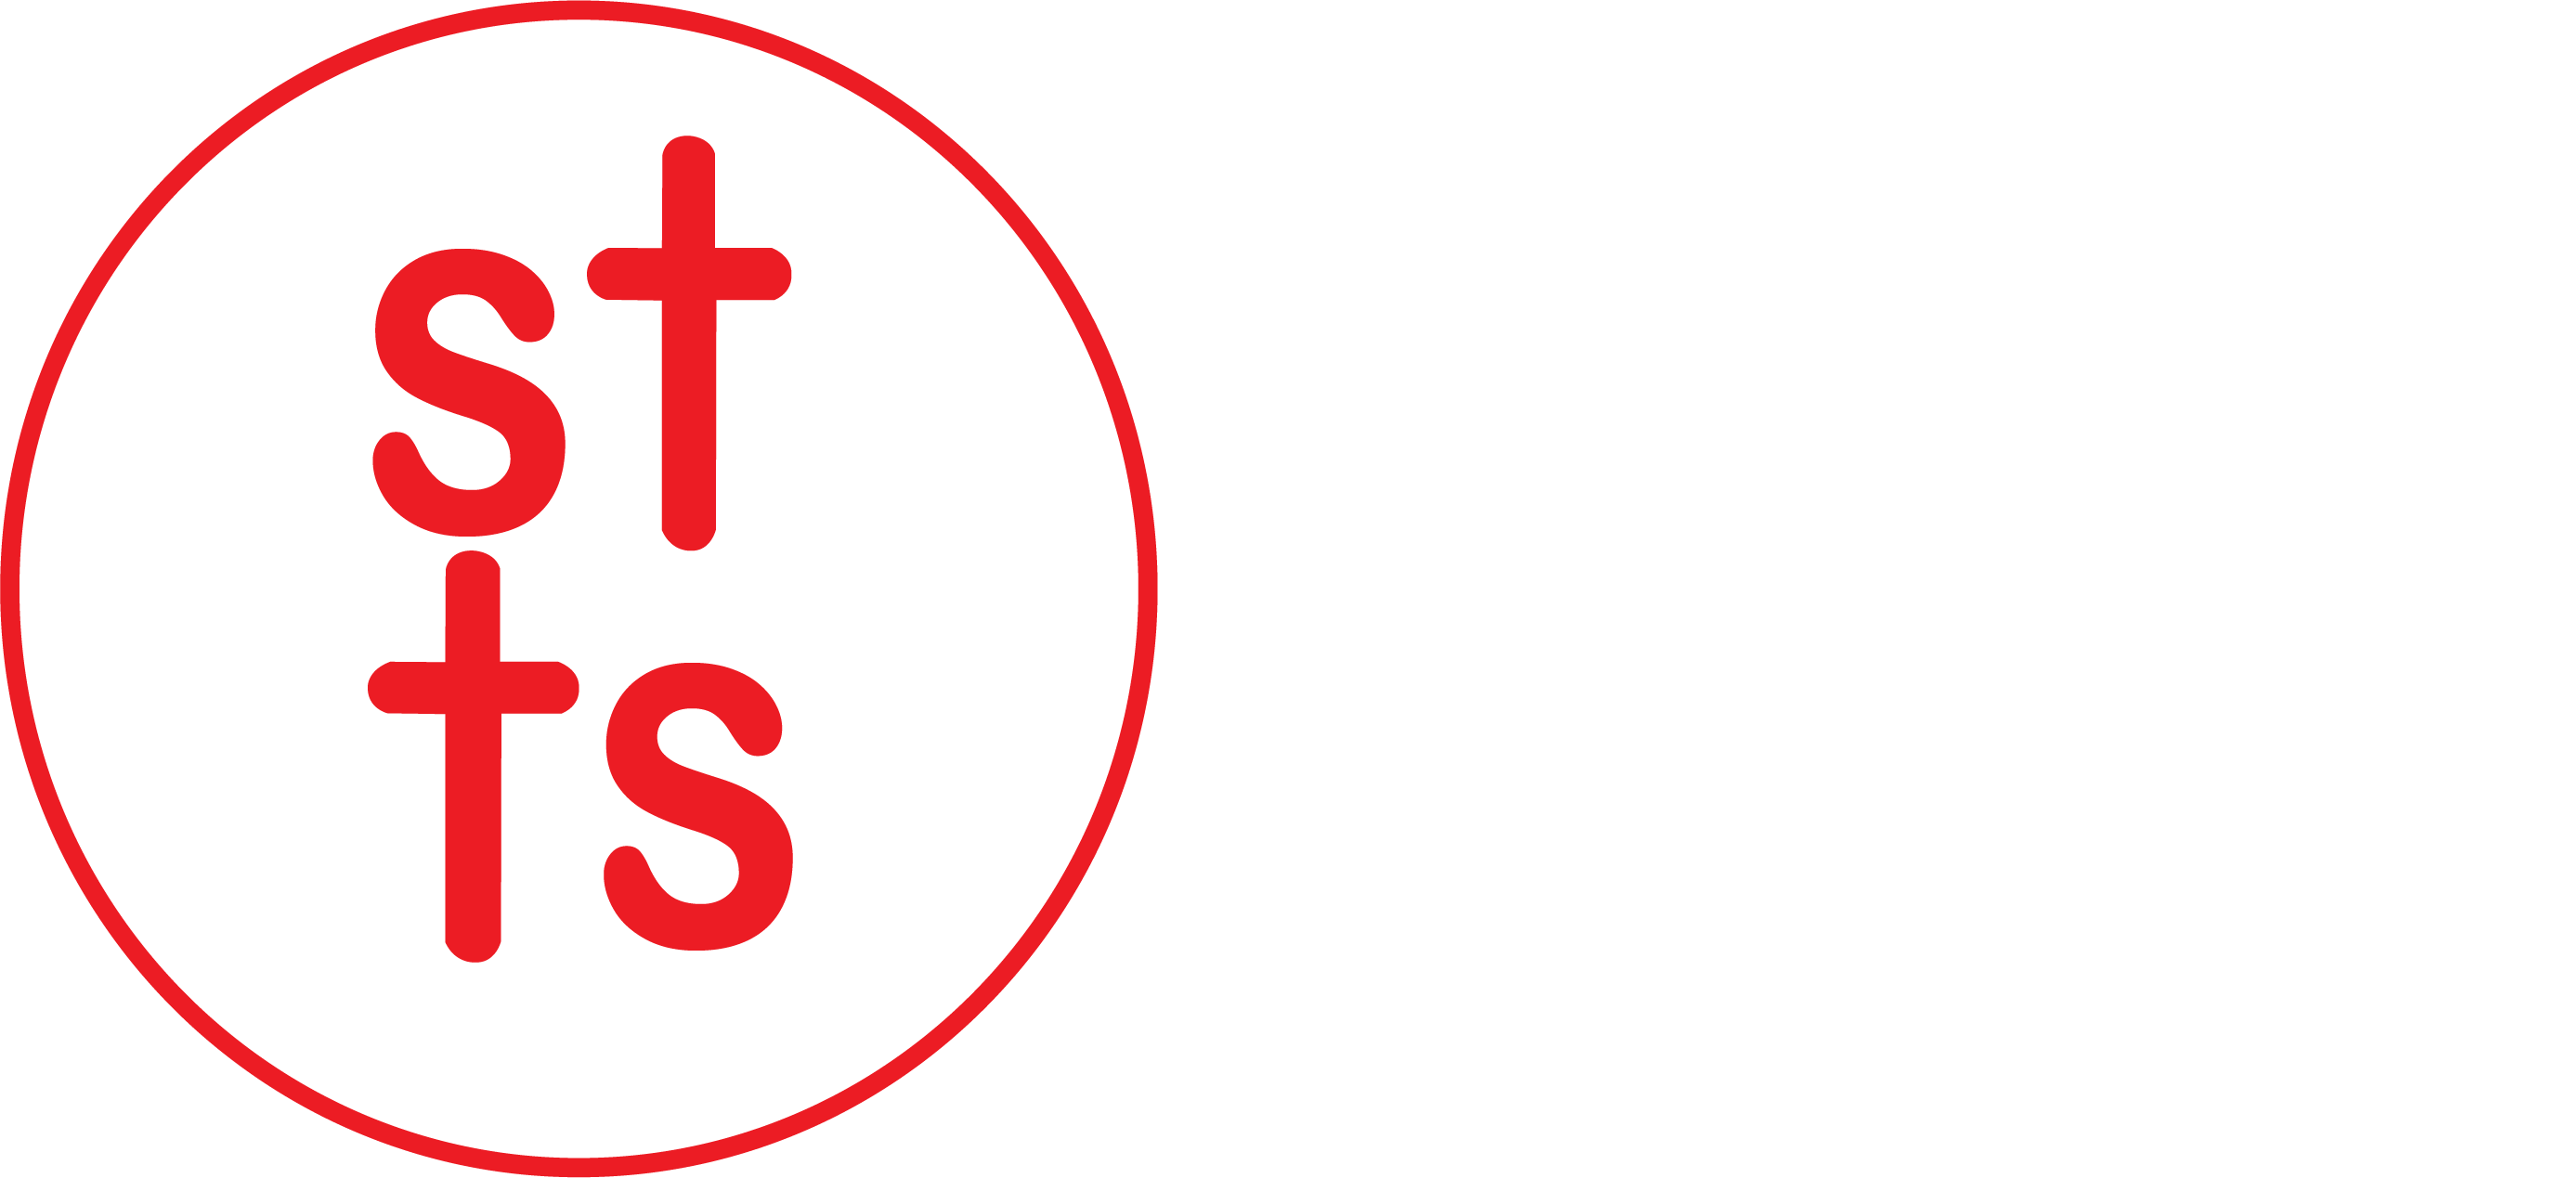 Full-size transp St T's logo b